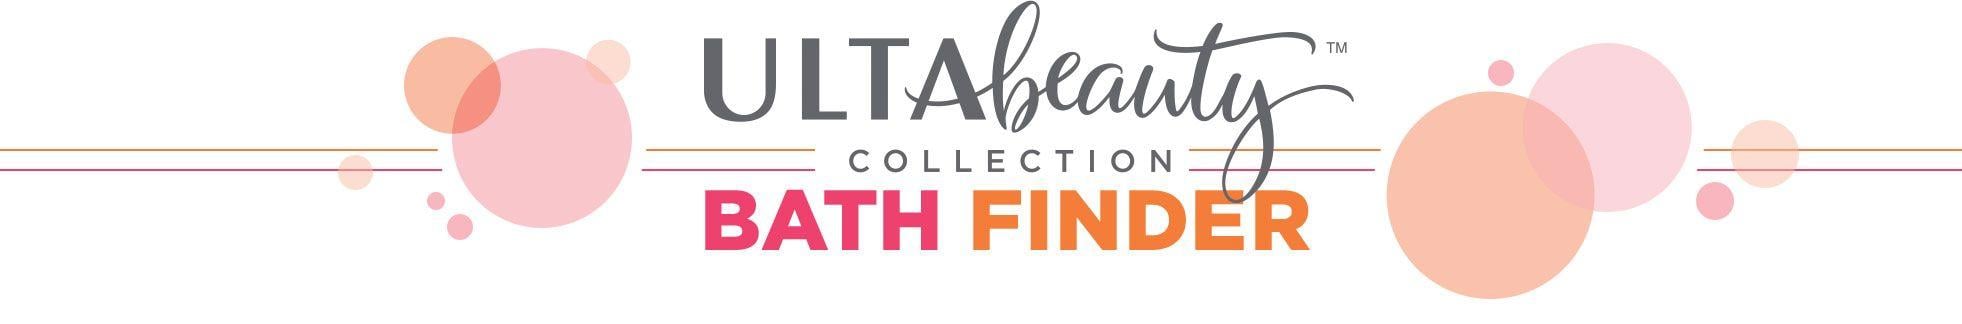 ULTA Beauty Logo - Ulta Bath Collection Finder | Ulta Beauty